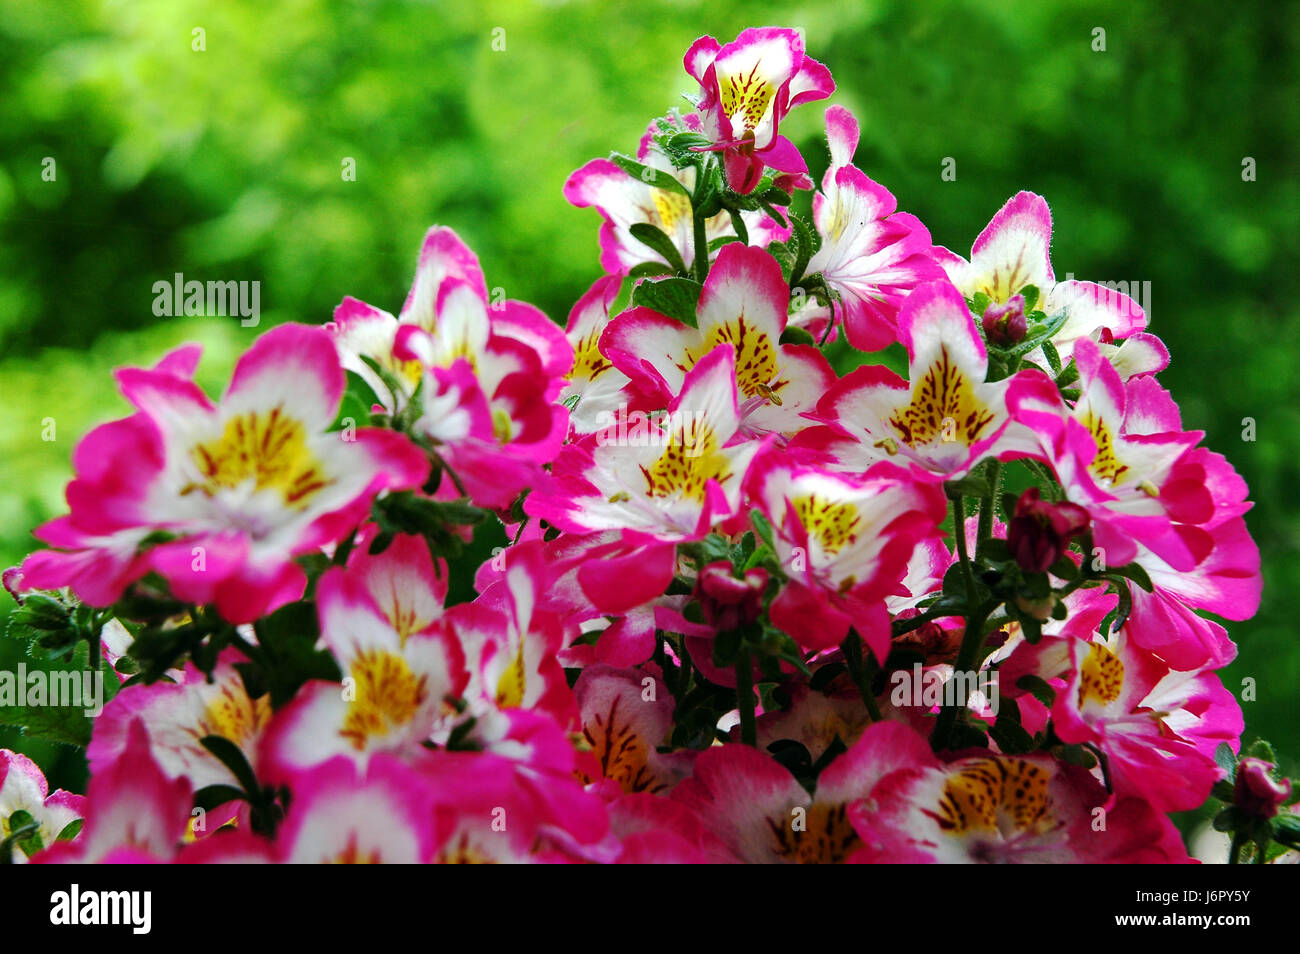 bloom blossom flourish flourishing flora petal bloom cup breed flower orchid Stock Photo